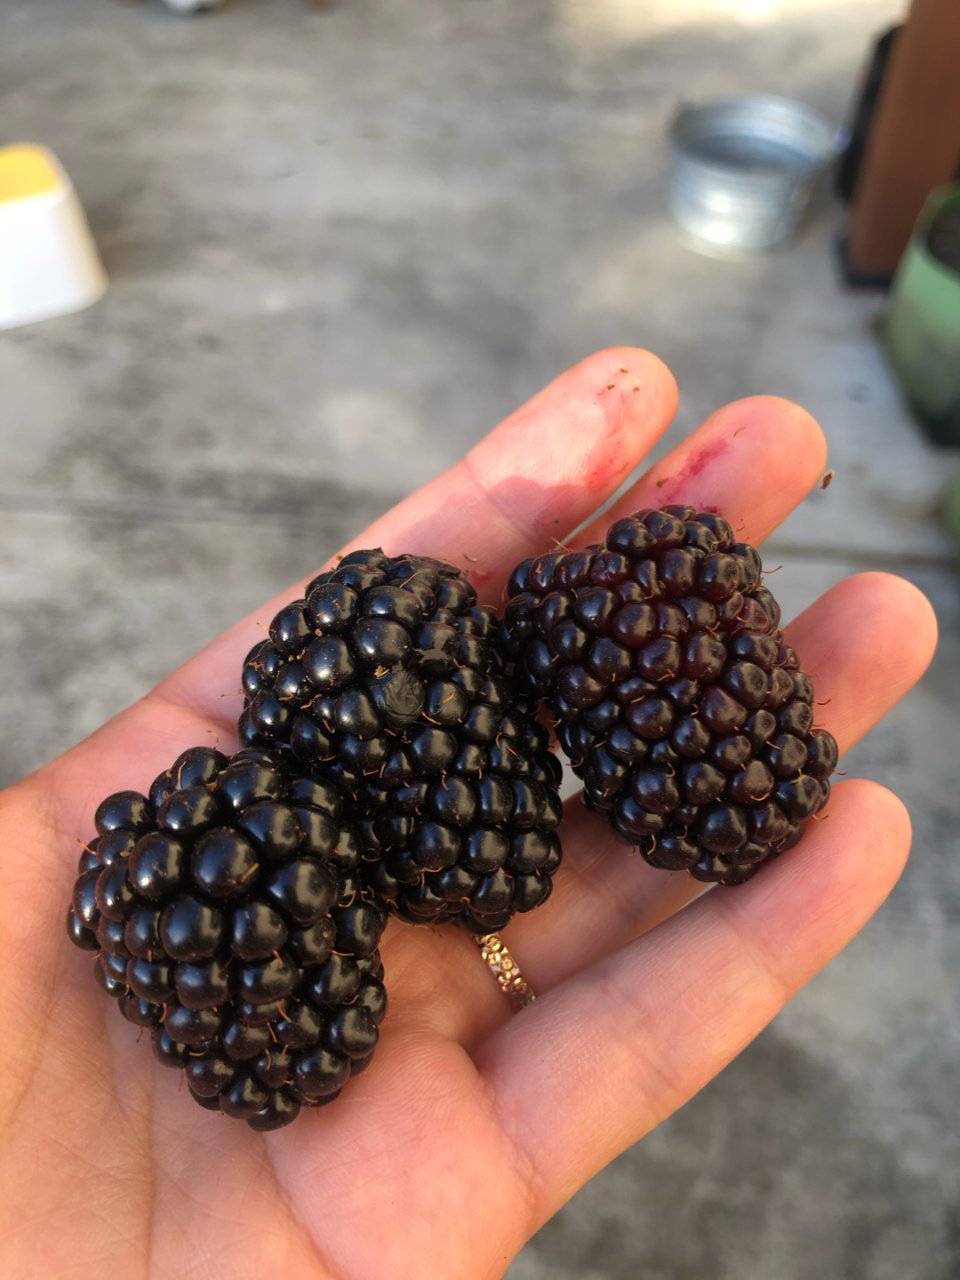 Blackberry 黑莓